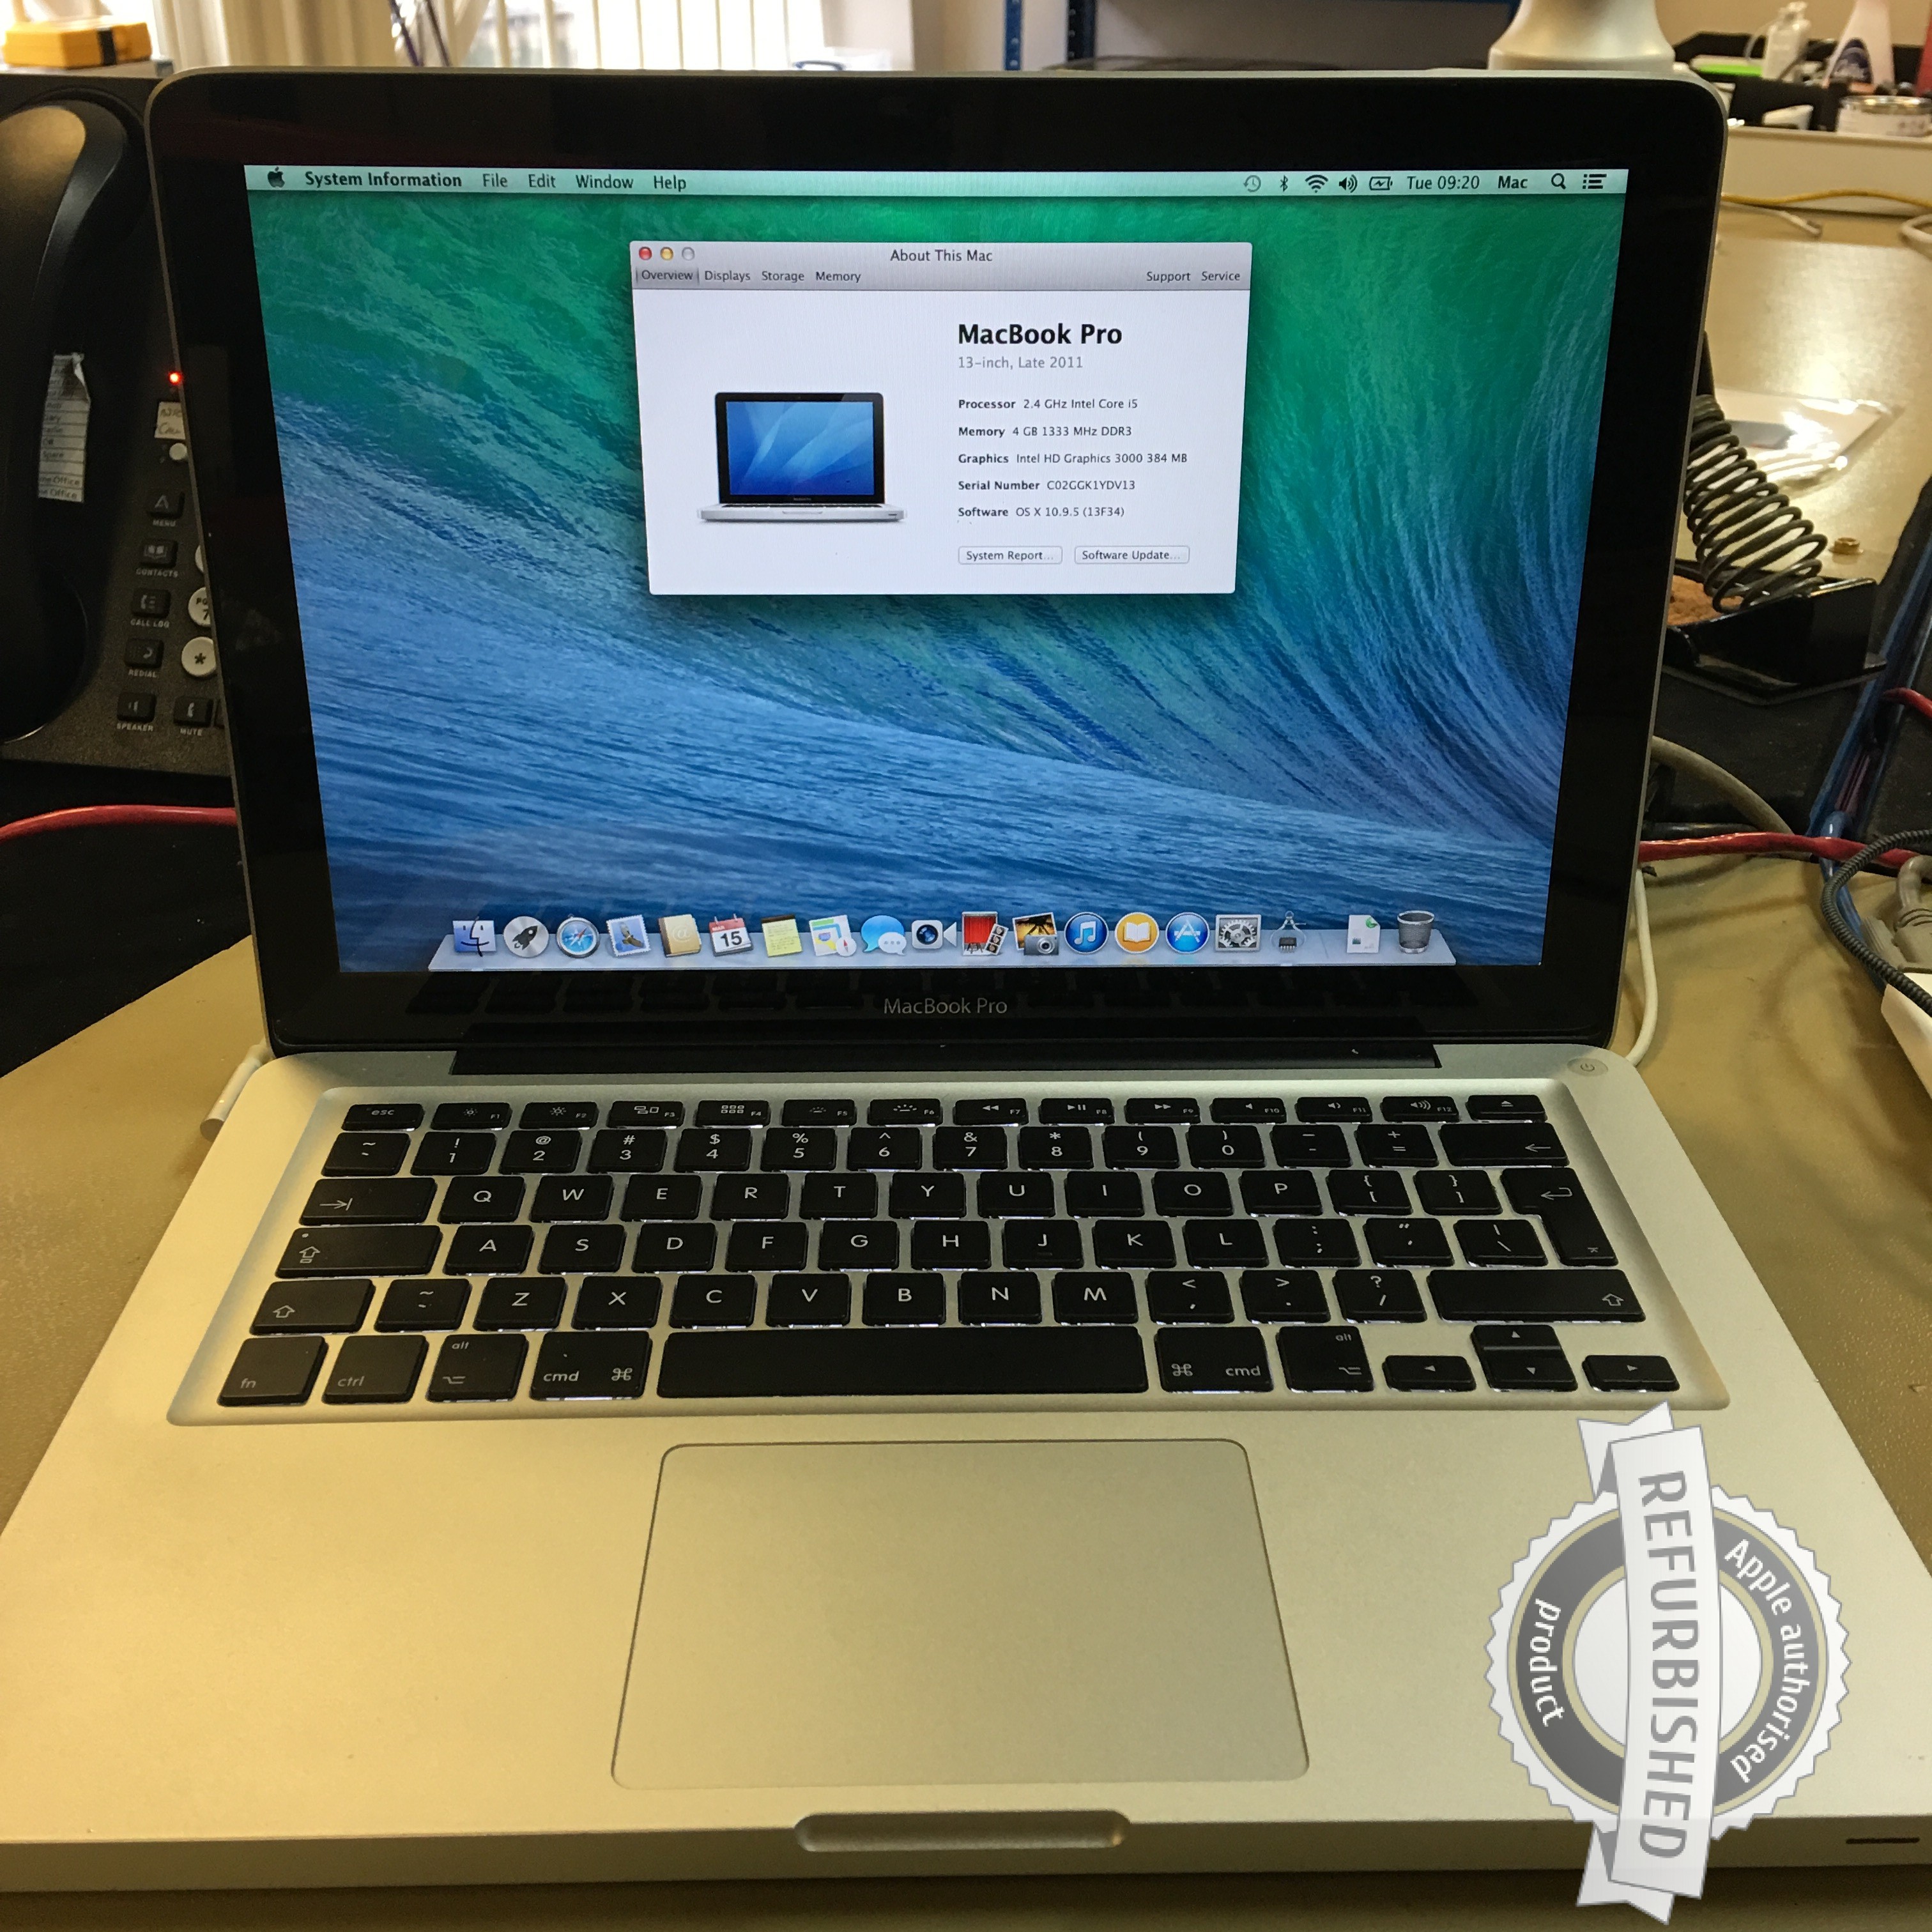 Refurbished MacBook Pro 13" 2.4 GHz Intel Core i5 / 4 GB 1333 MHz DDR3